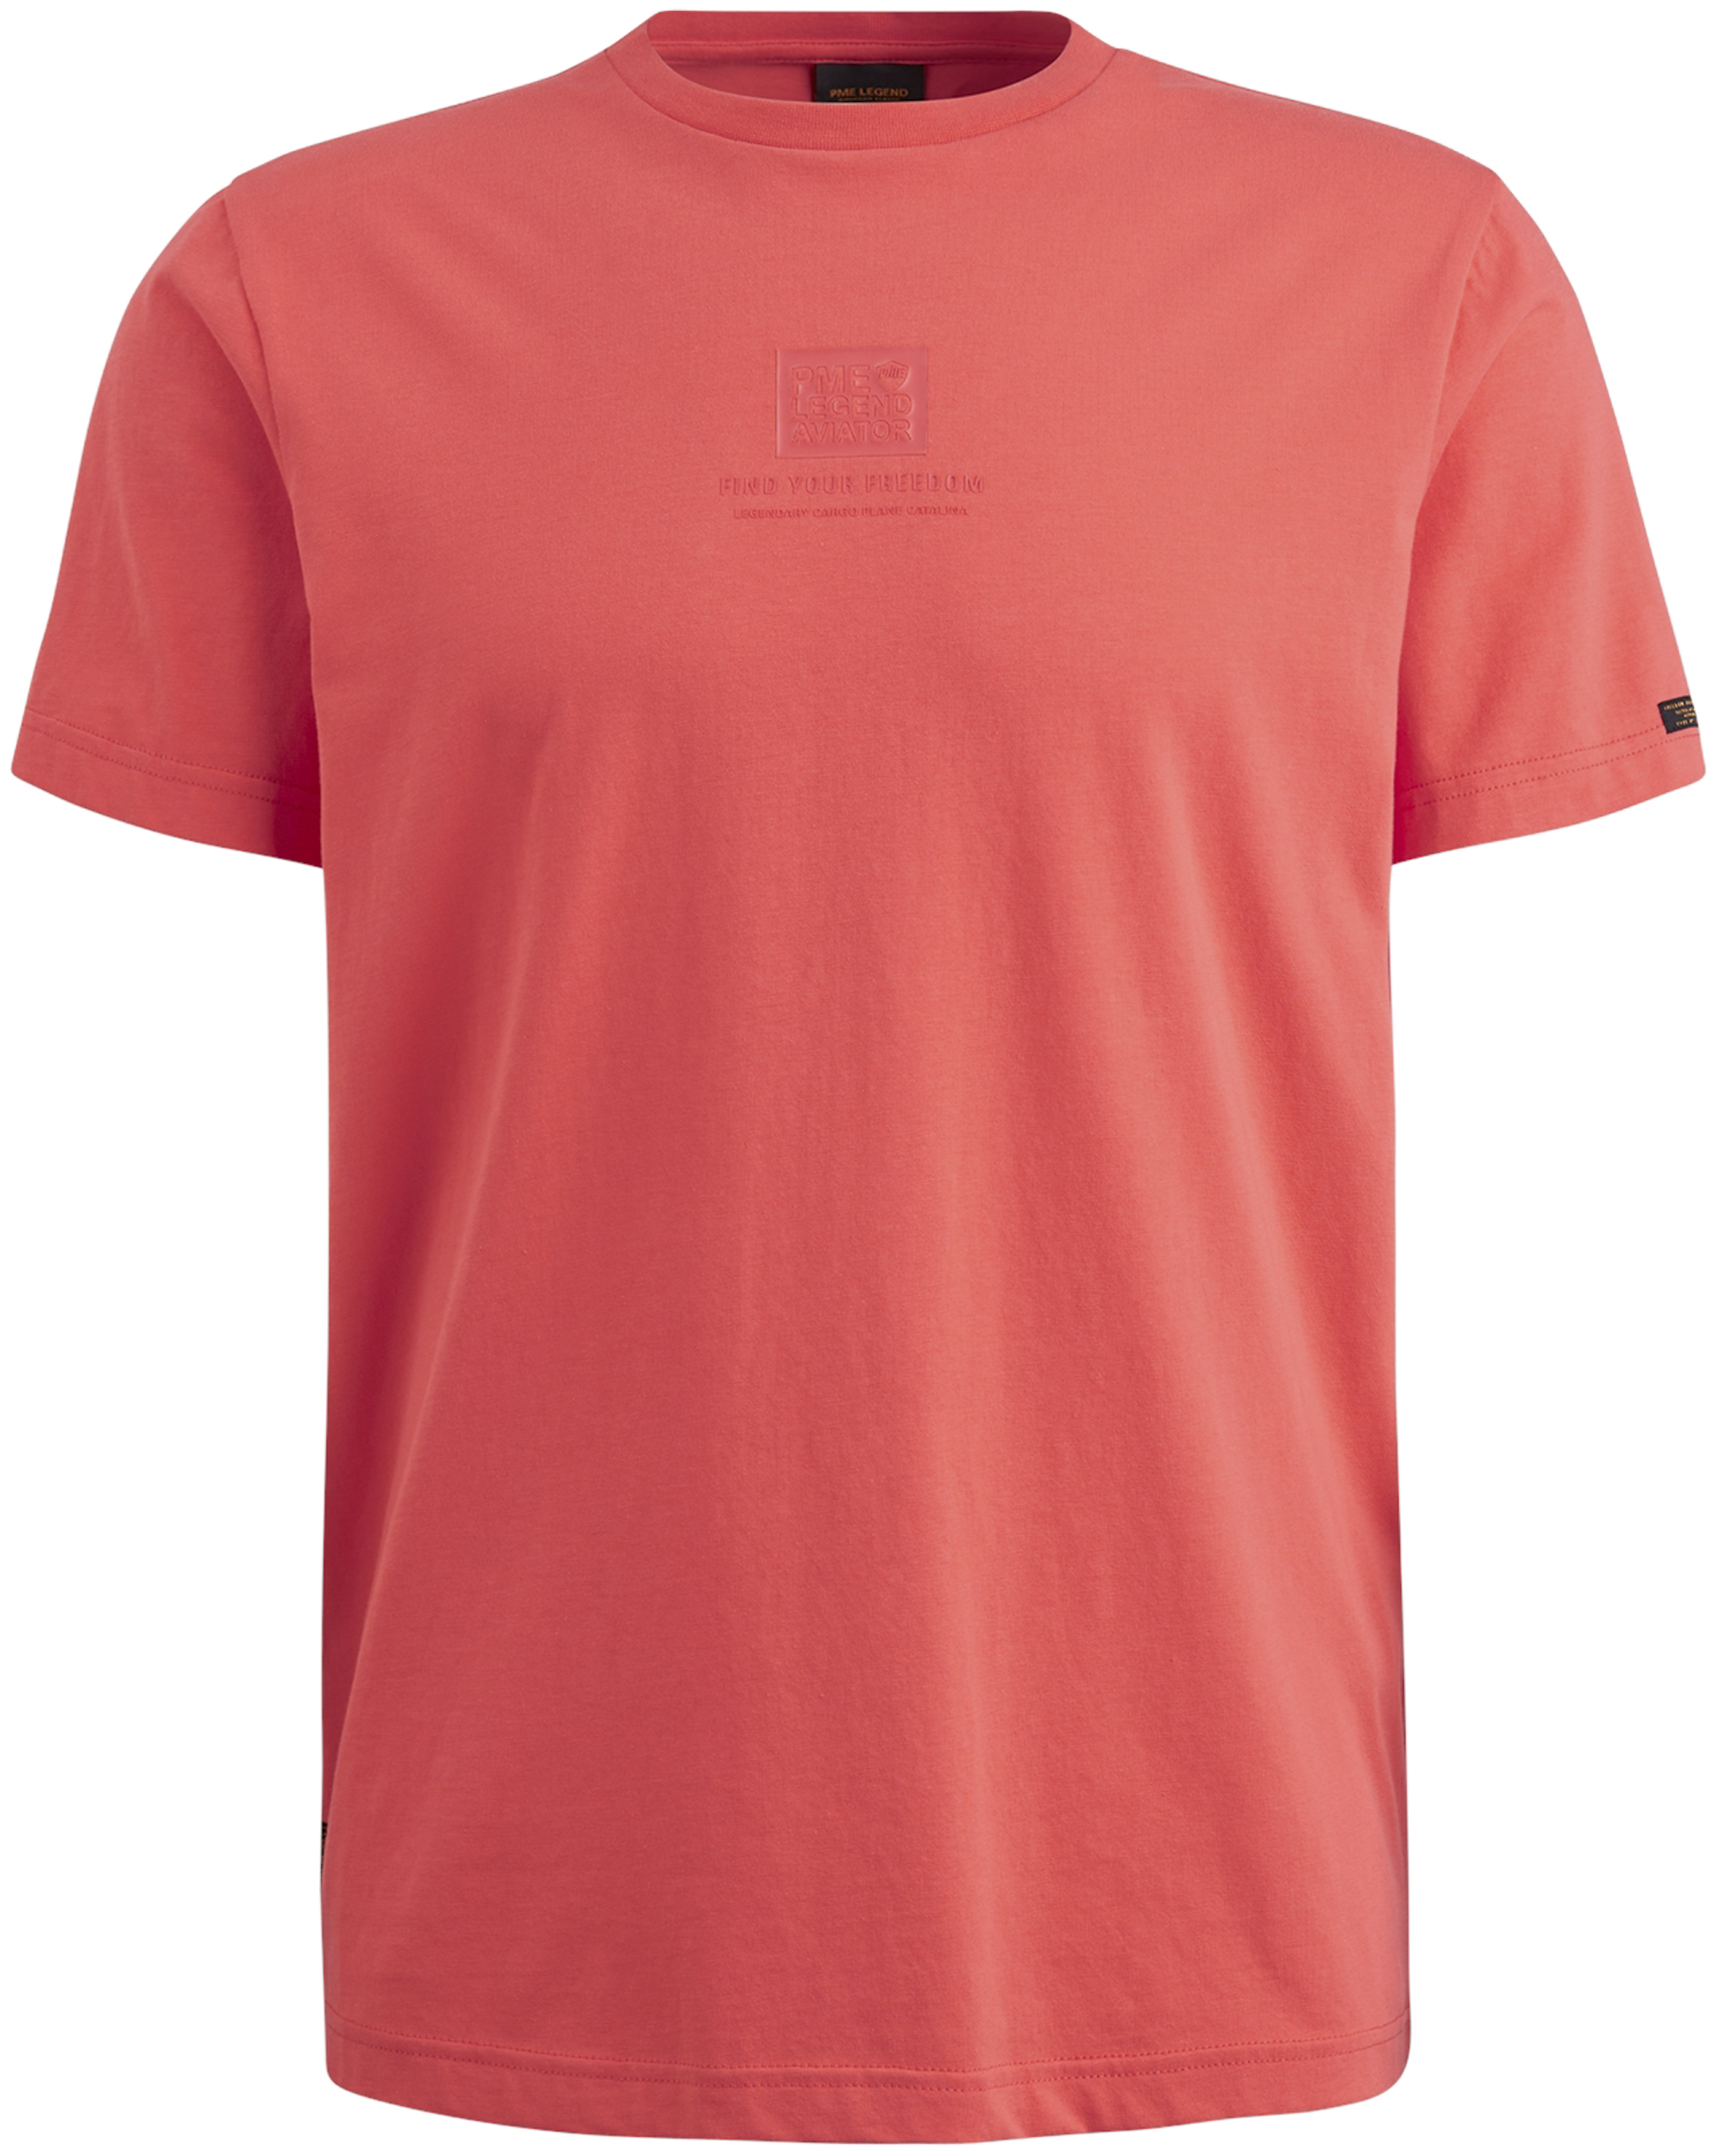 PME Legend T-Shirt Jersey Oranje